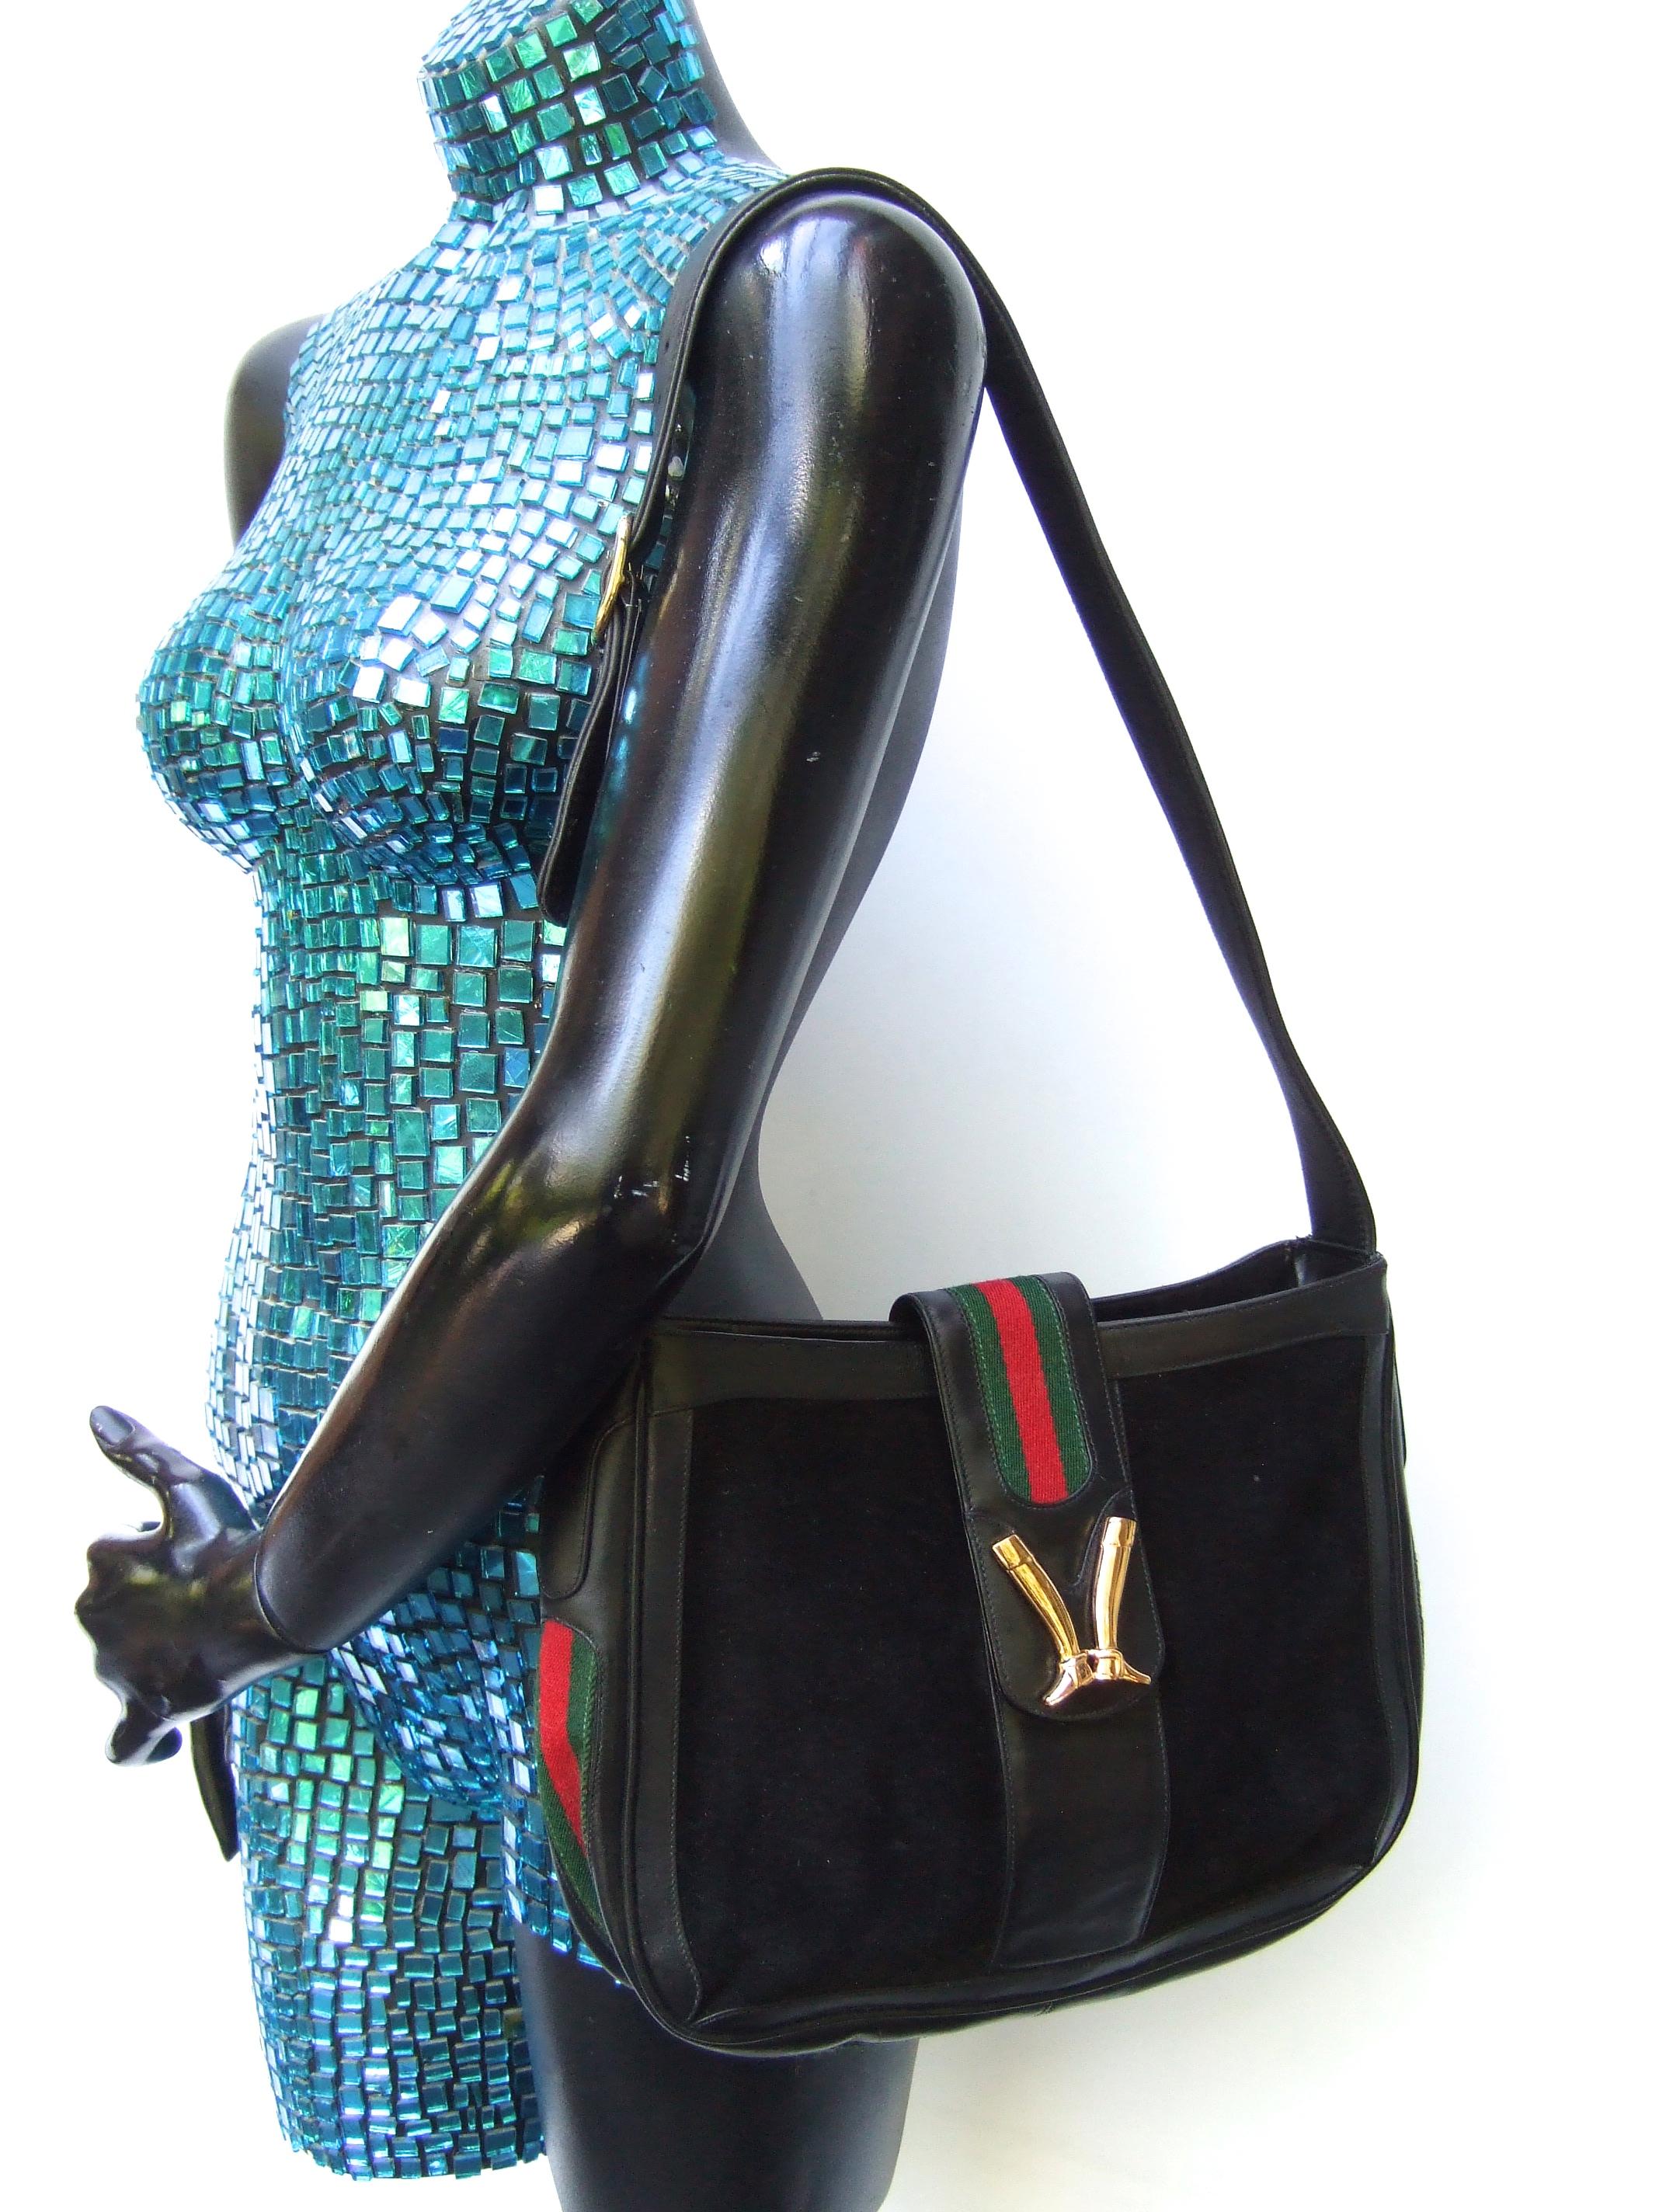 Gucci Italy Rare Black Suede Boot Emblem Shoulder Bag c 1970s For Sale 11